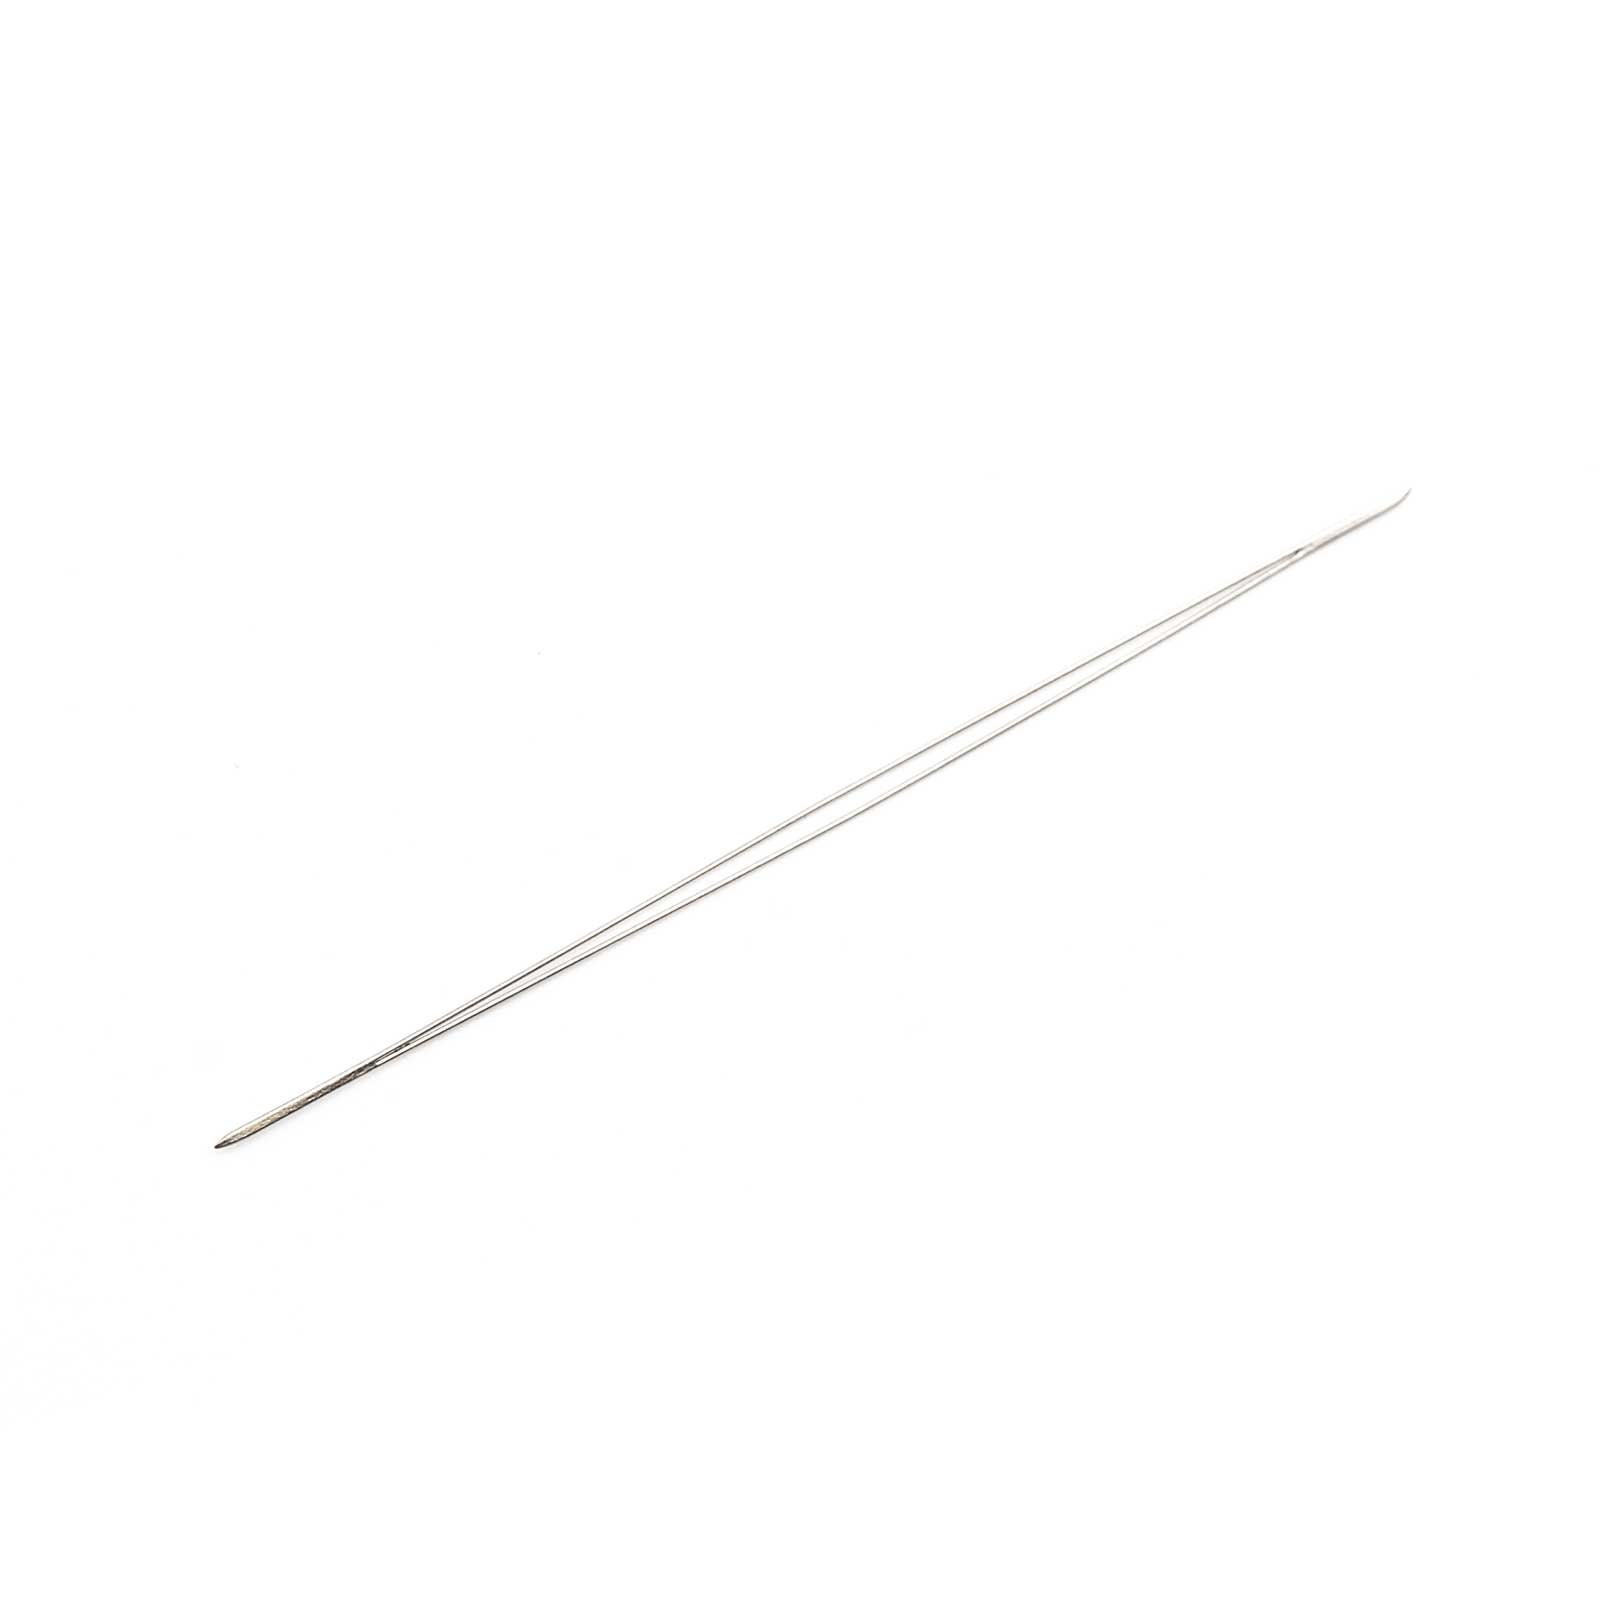 5pcs Beading Needles Super Thin Central Opening the Bead Needle